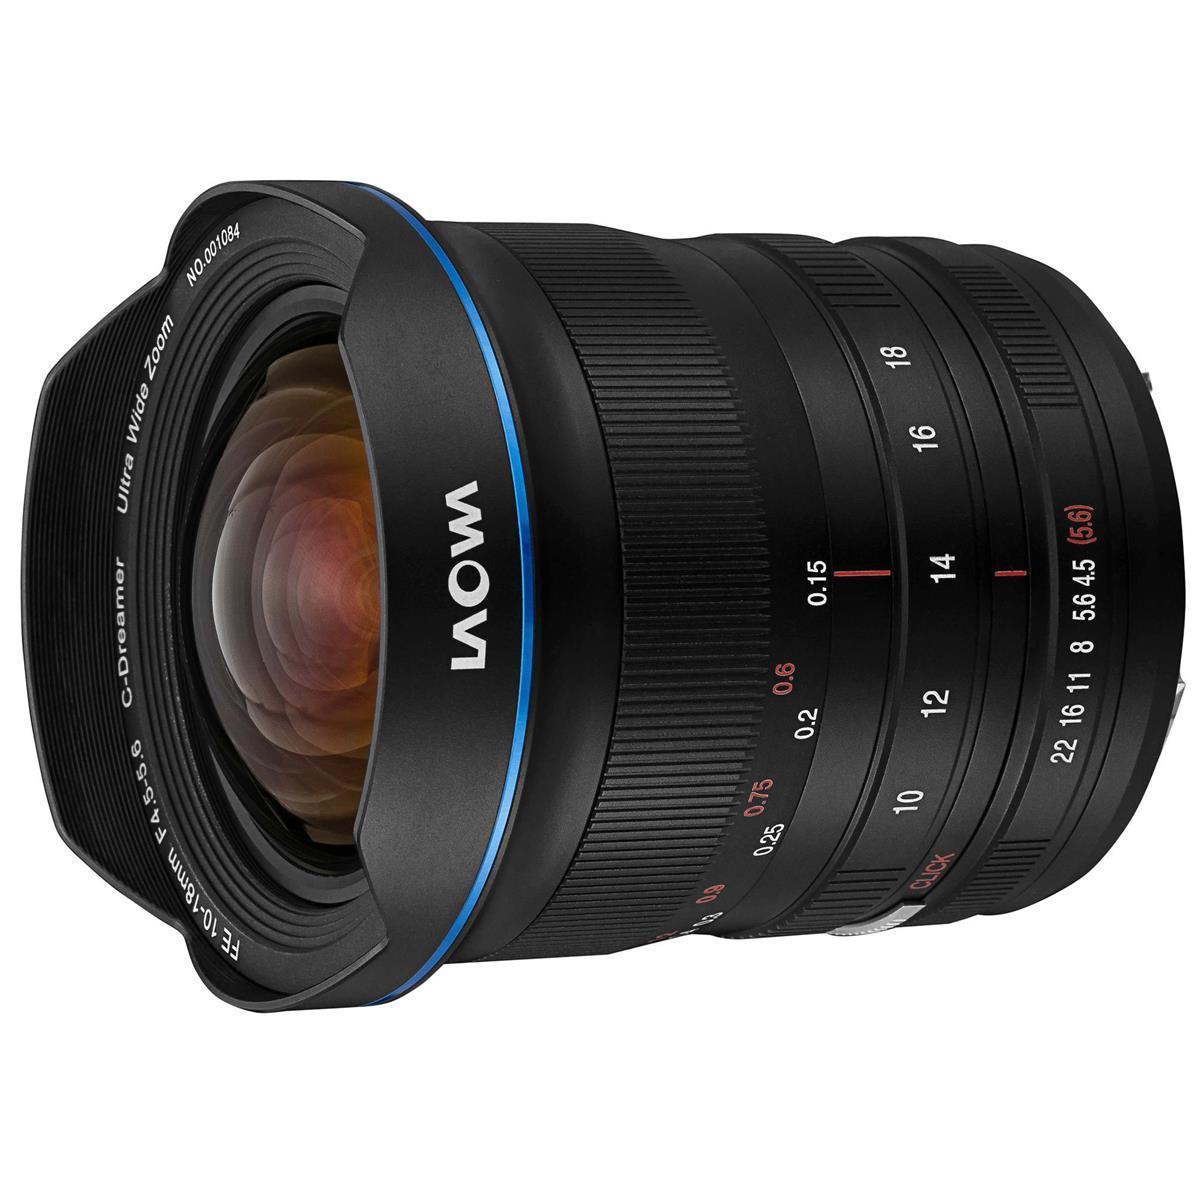 3. LAOWA Lens 10-18mm F/4.5-5.6 FE Zoom (Leica L)